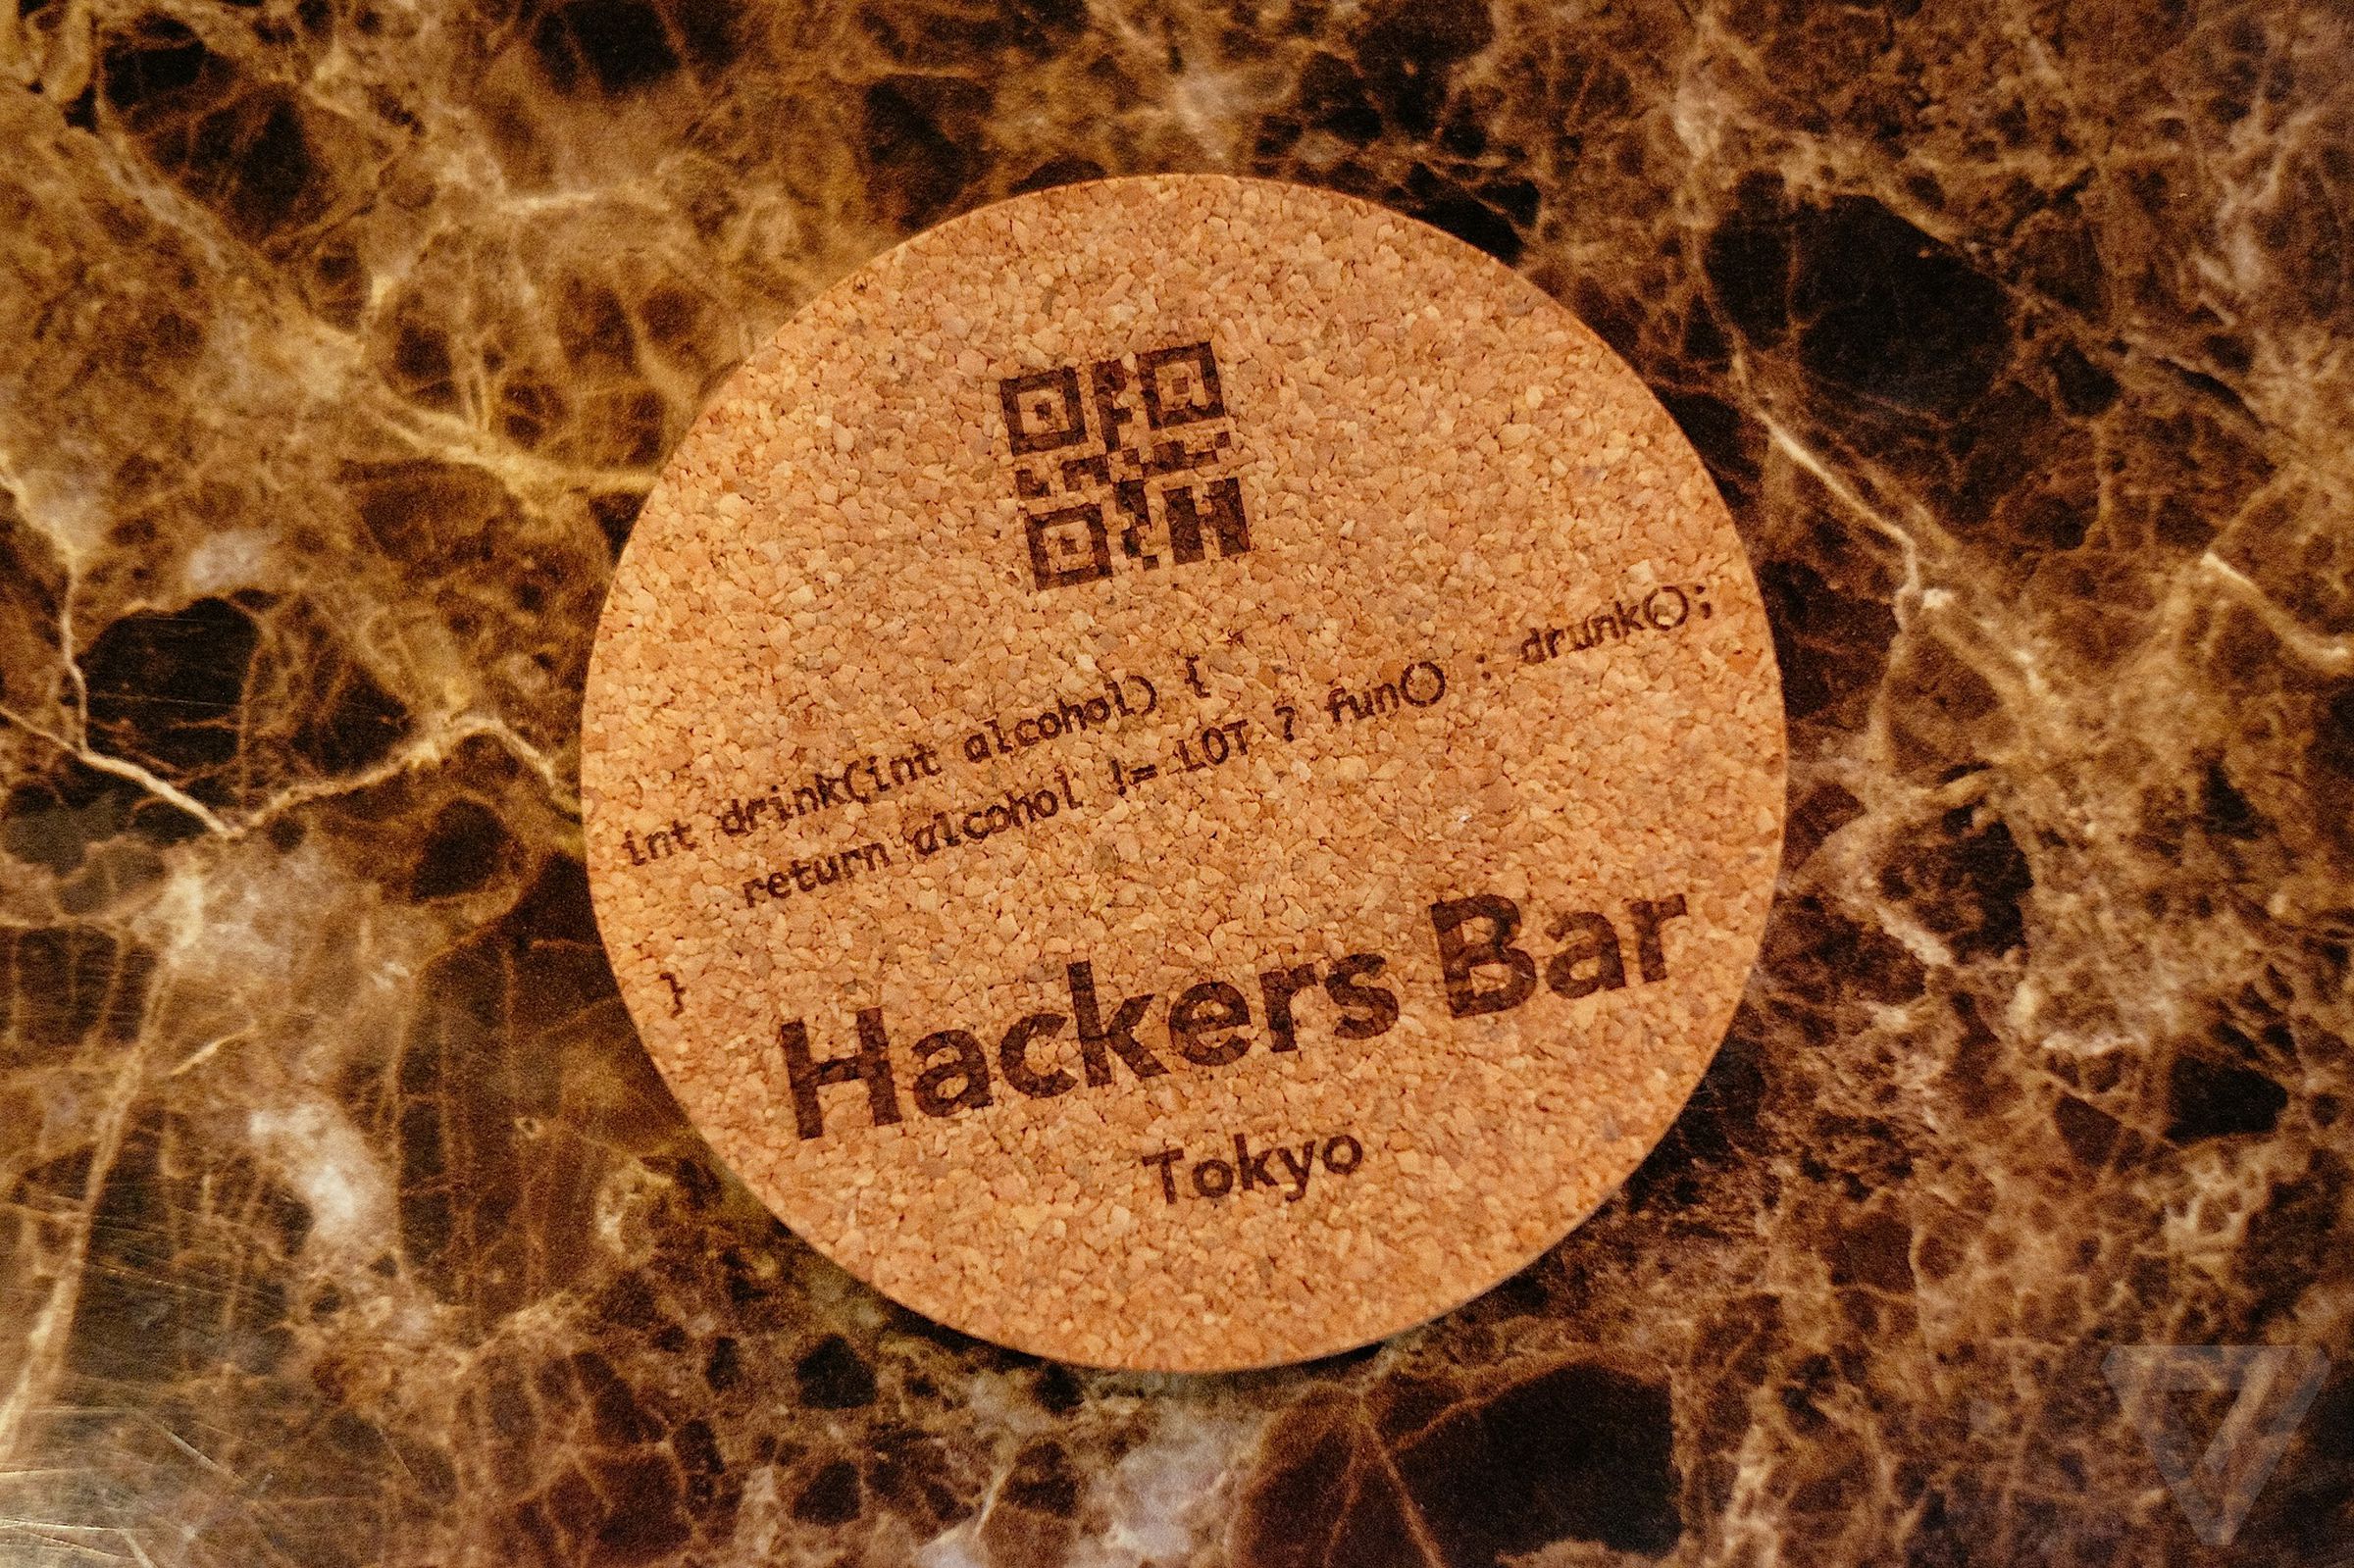 Hackers Bar, Tokyo